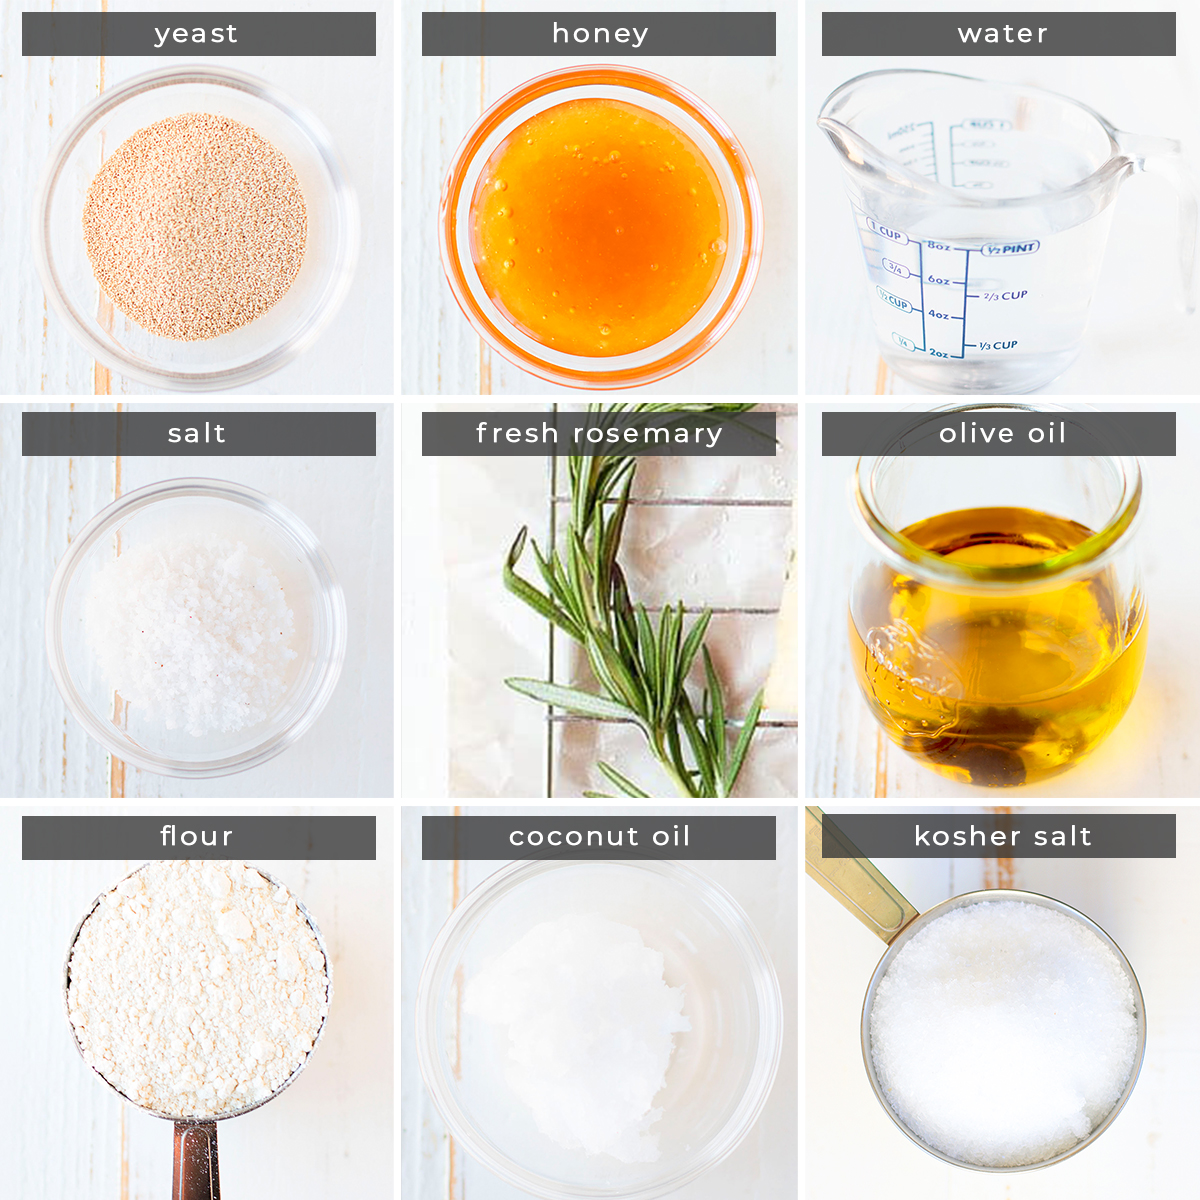 Image containing recipe ingredients yeast, honey, water, salt, fresh rosemary, olive oil, flour, coconut oil, kosher salt.